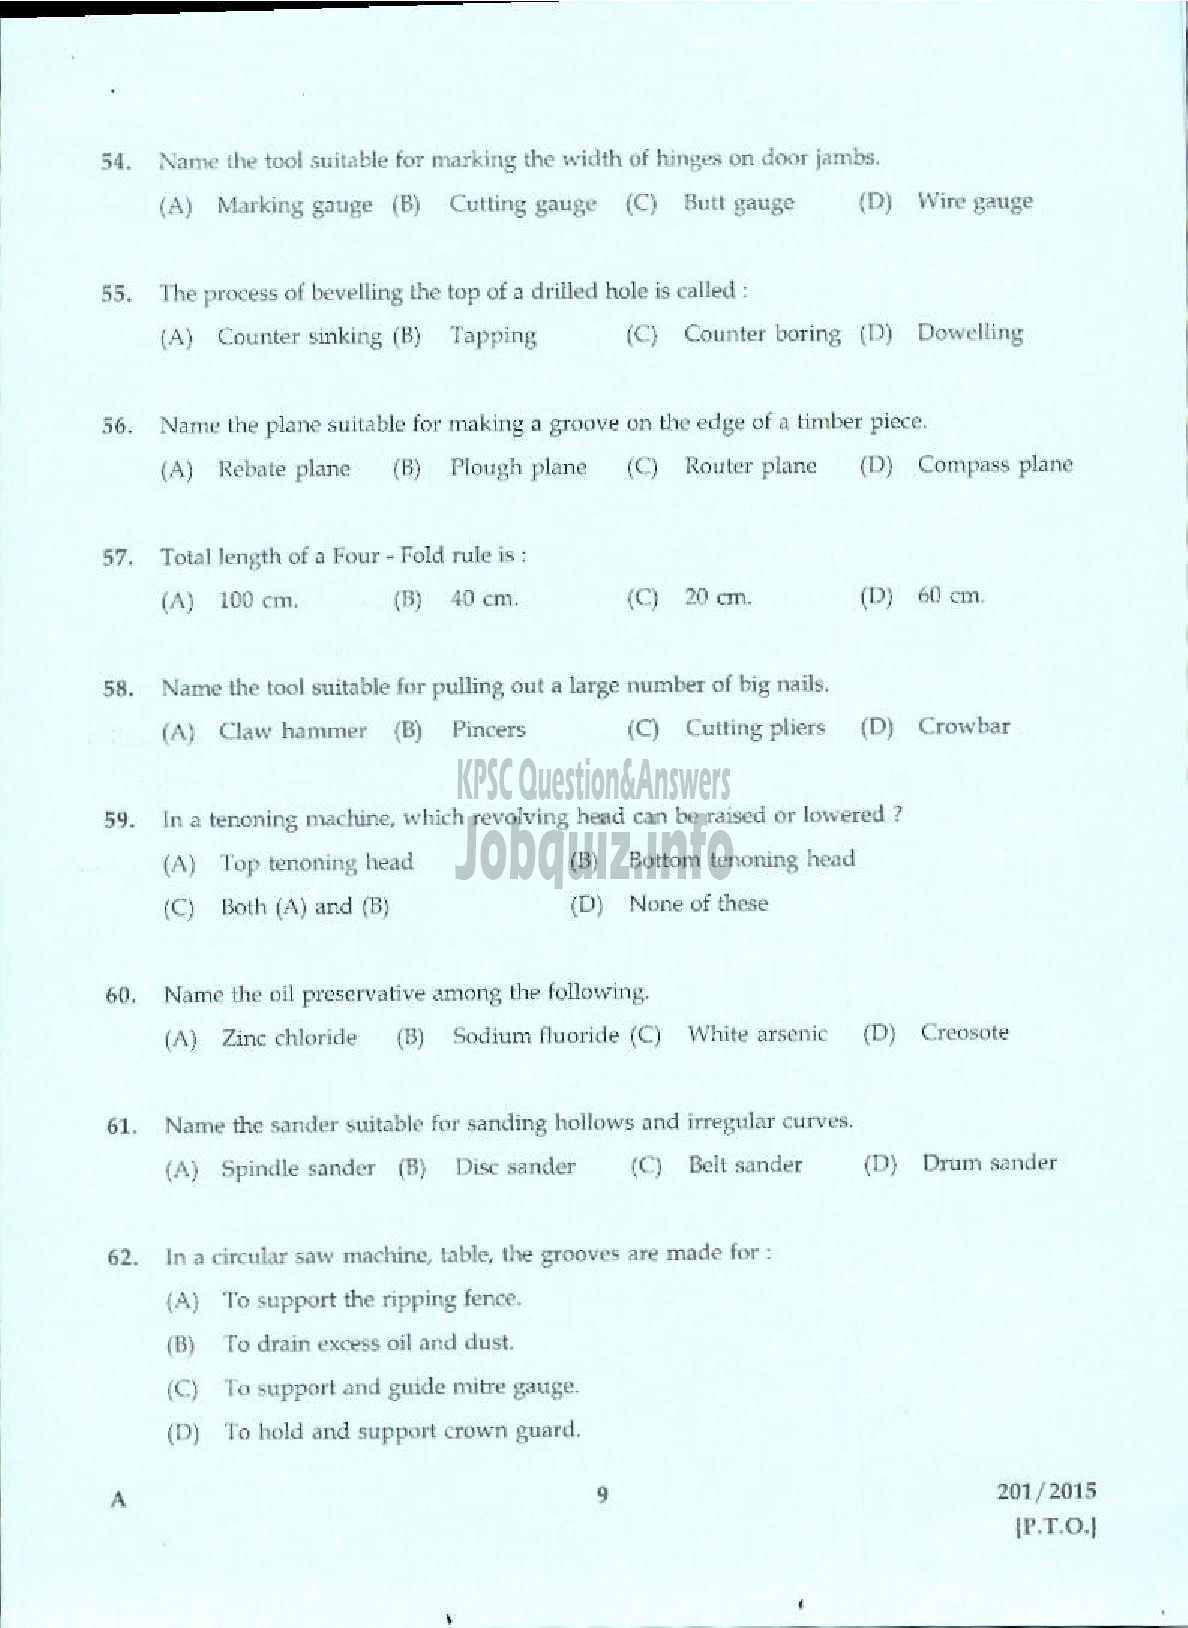 Kerala PSC Question Paper - TRADESMAN CARPENTRY TECHNICAL EDUCATION-7